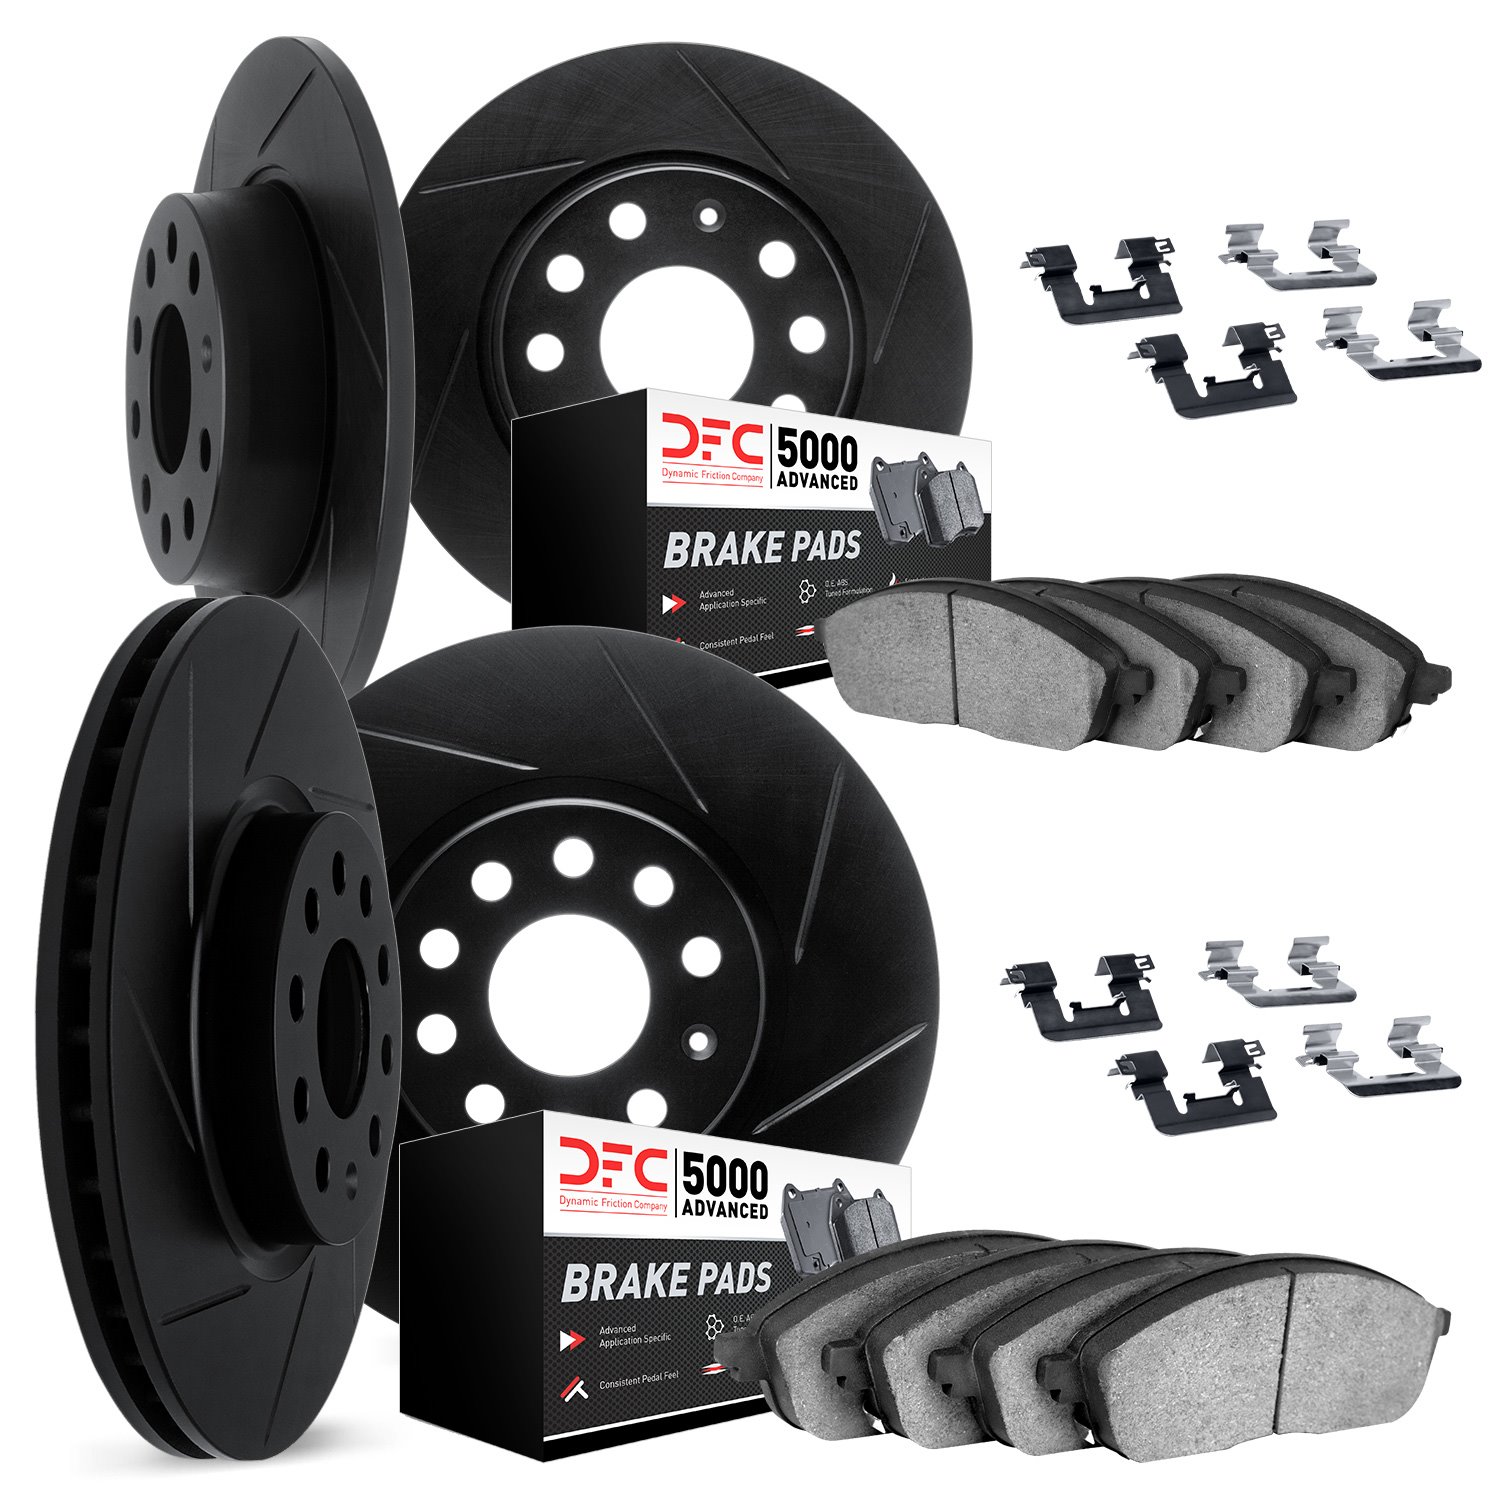 3514-42003 Slotted Brake Rotors w/5000 Advanced Brake Pads Kit & Hardware [Black], 2003-2006 Mopar, Position: Front and Rear